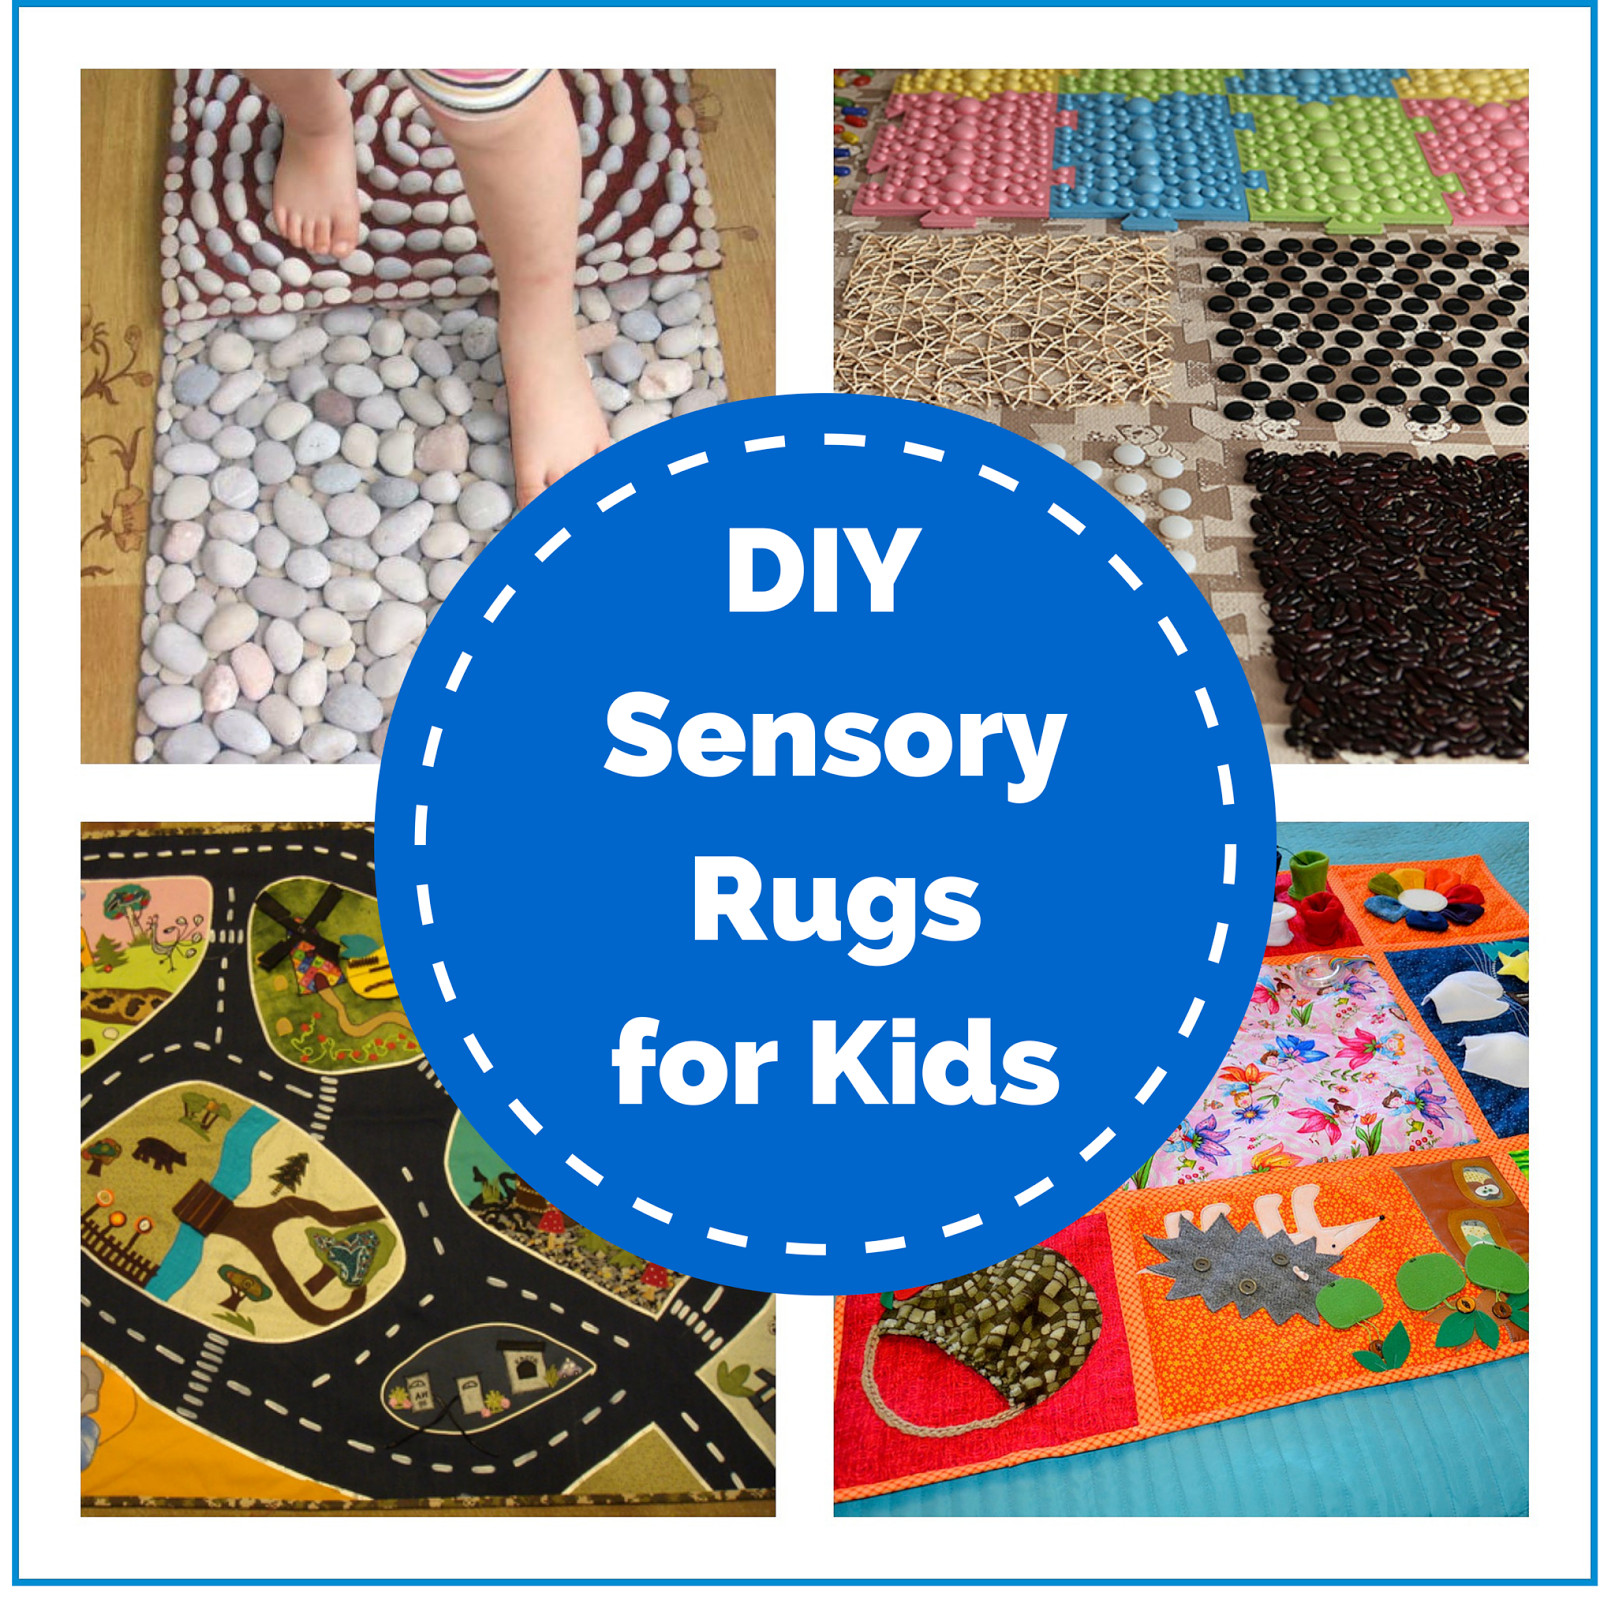 DIY Sensory Toys For Toddlers
 DIY Sensory Rugs for Kids Montessori Nature